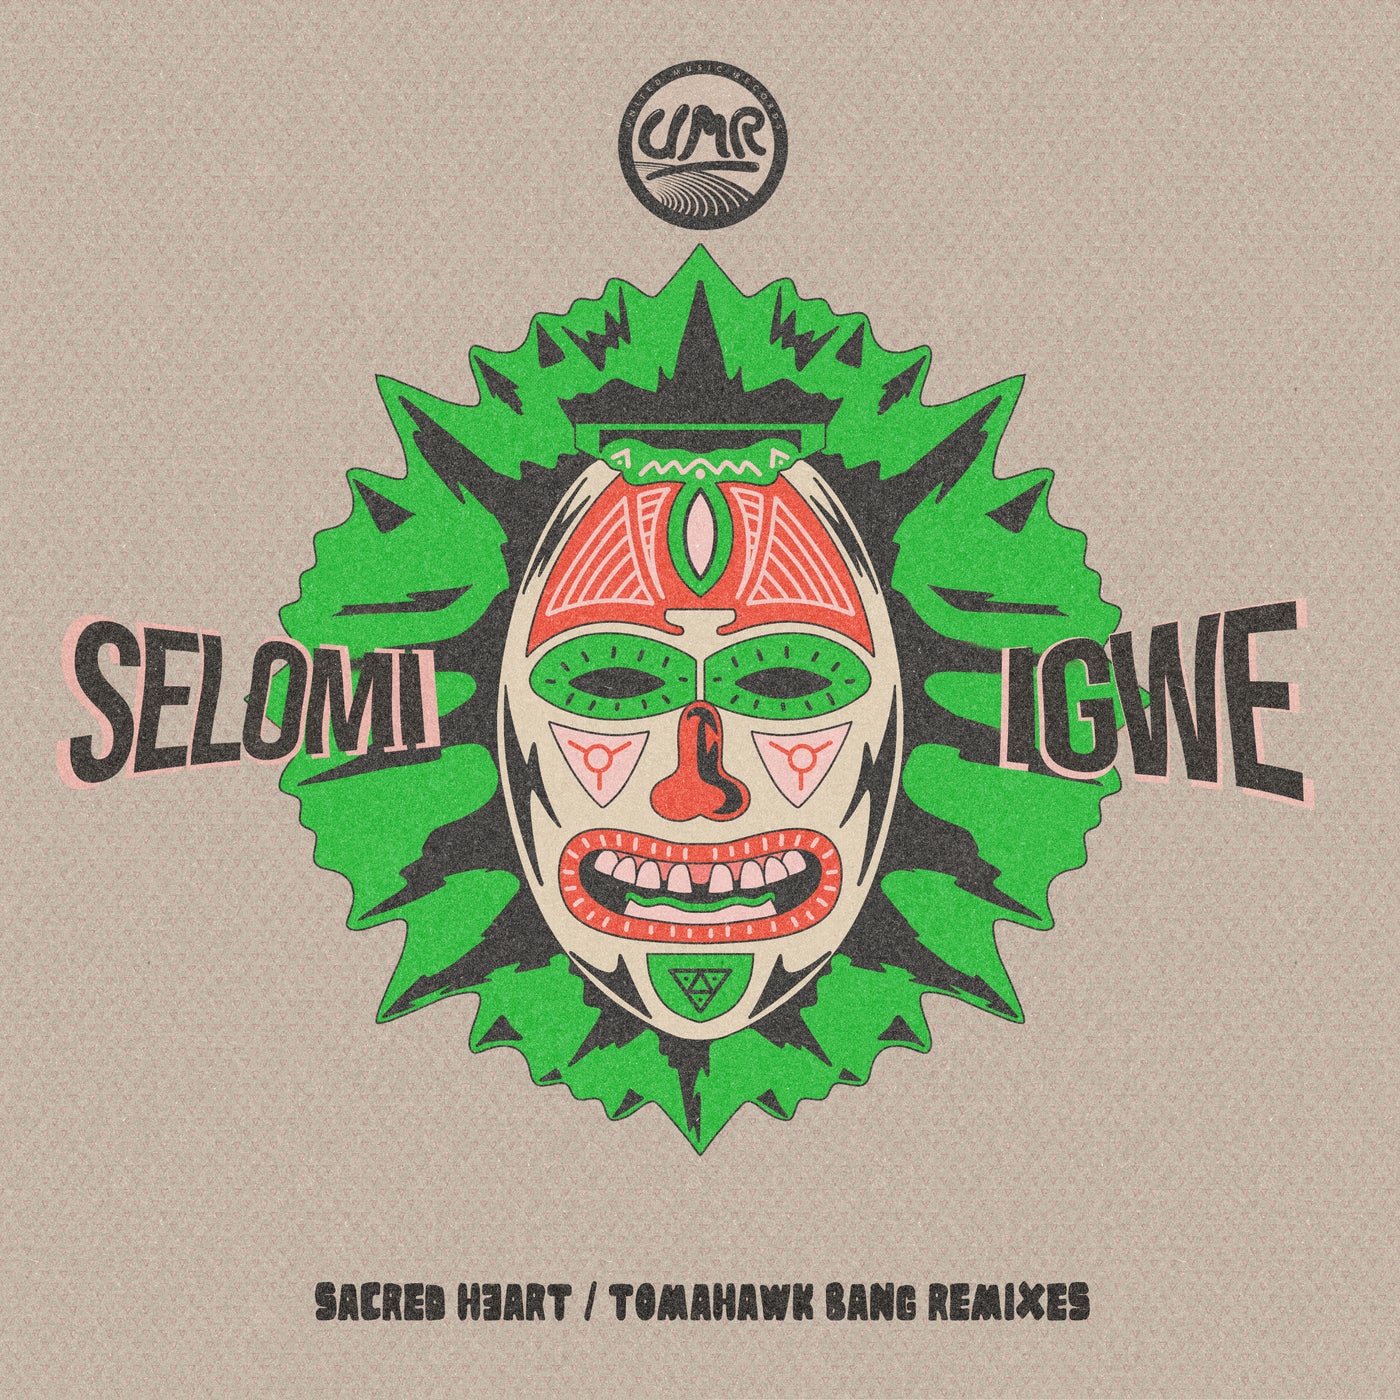 Selomi - Igwe on United Music Records